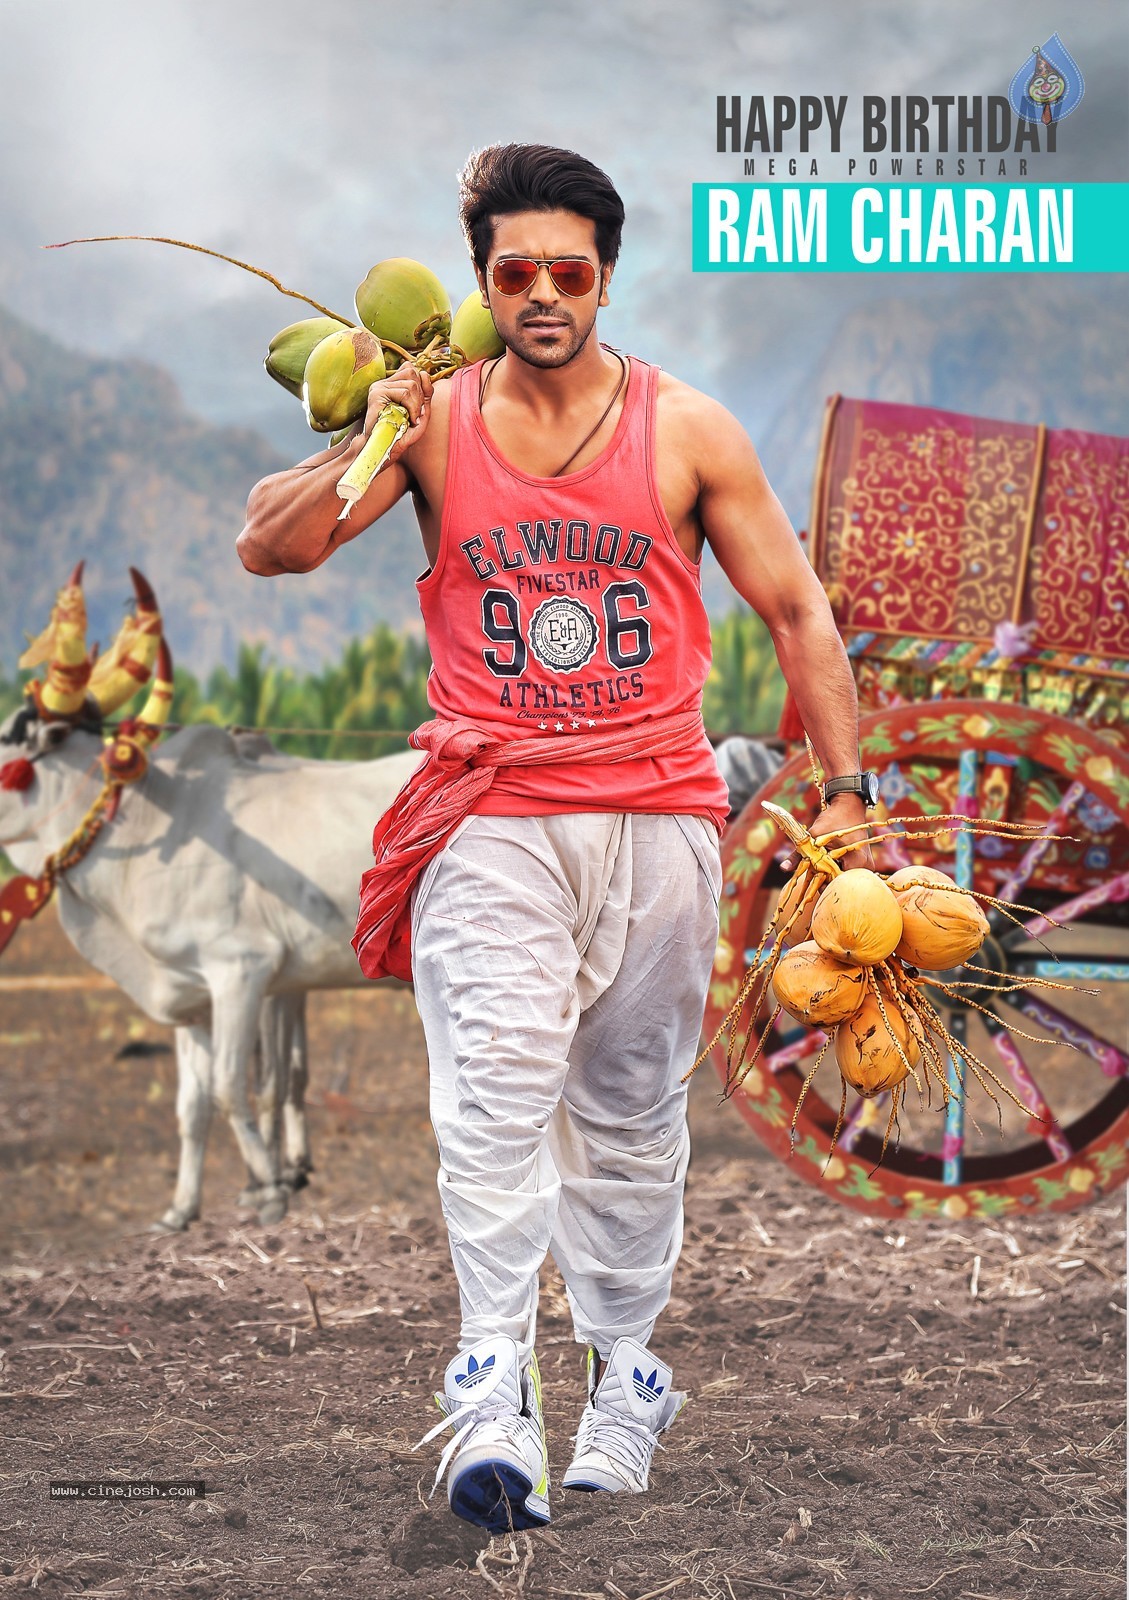 Ram Charan Birthday Wallpapers - 8 / 8 photos